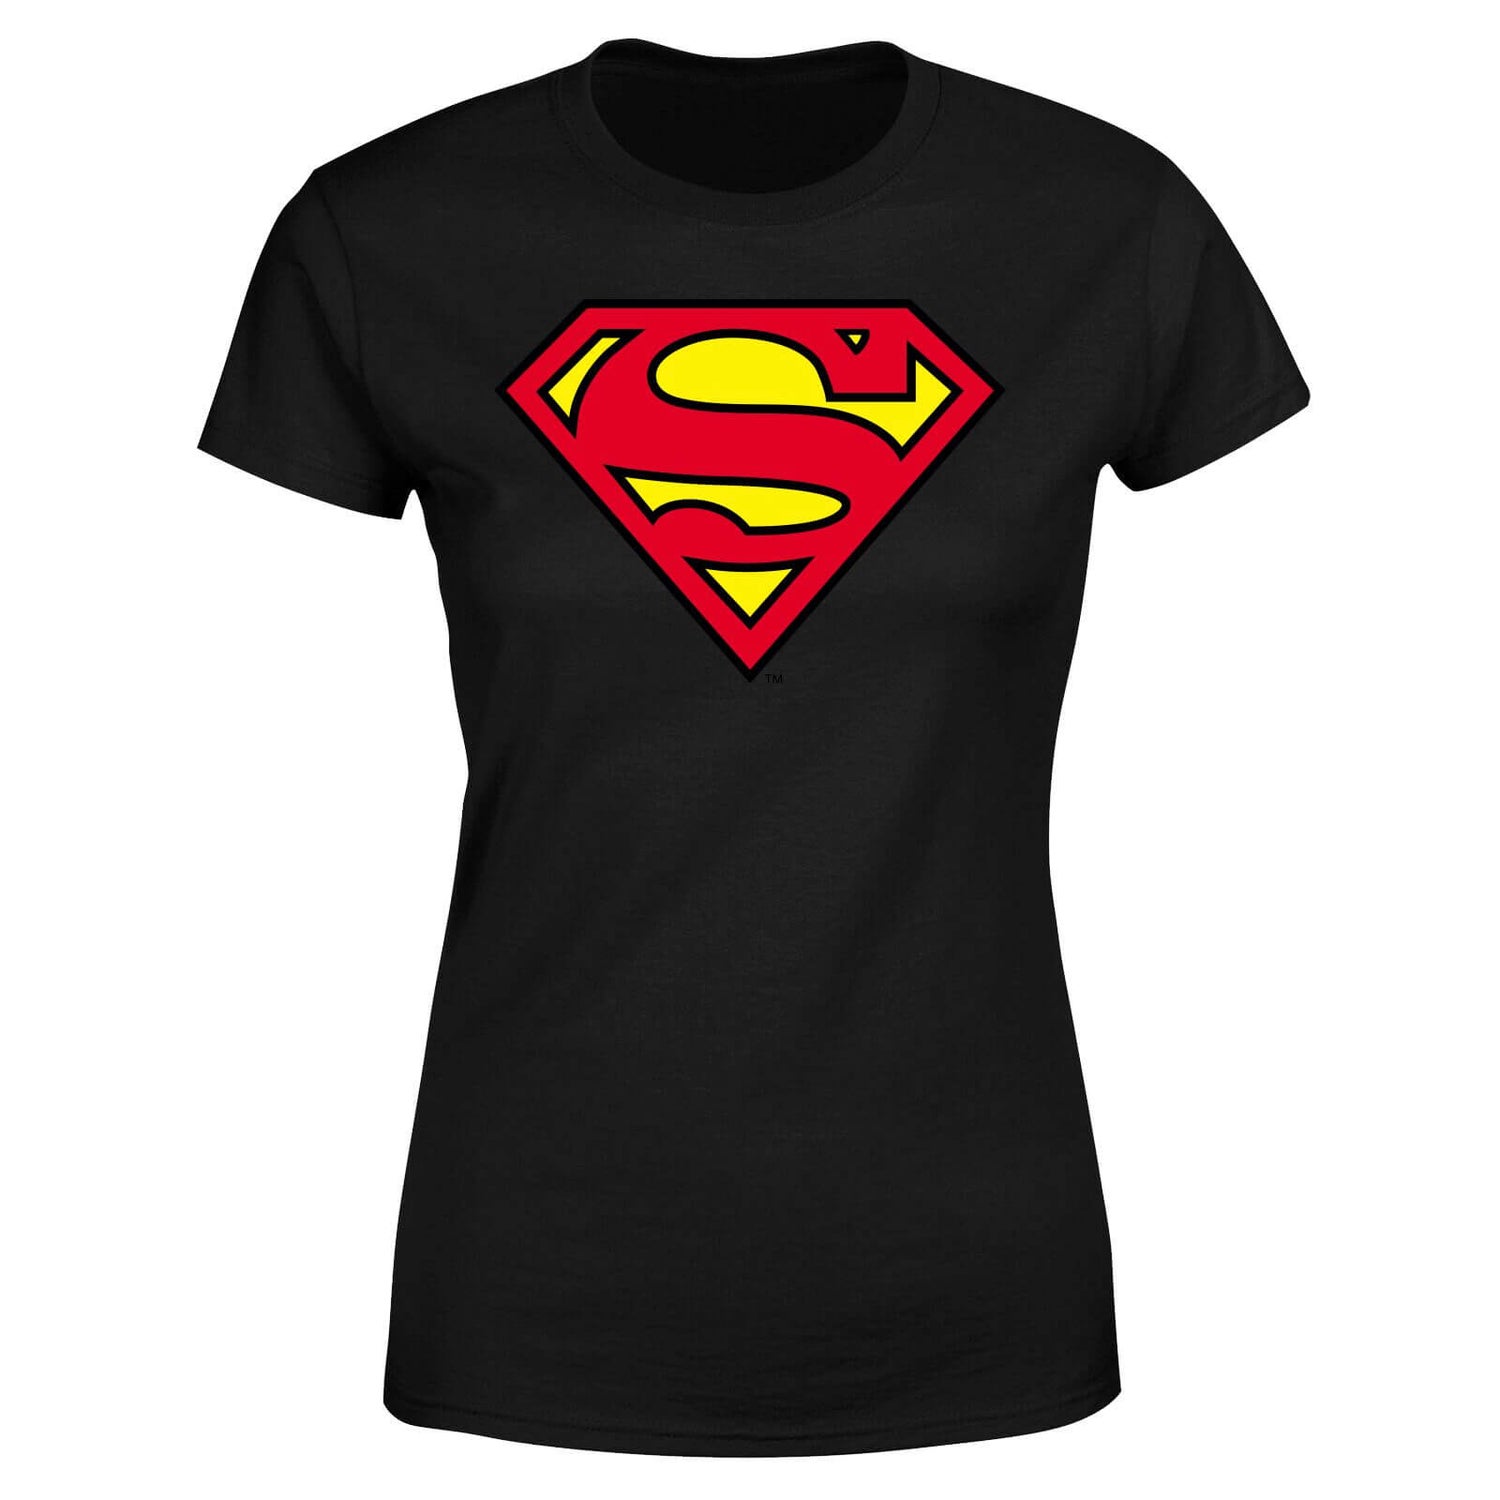 Official Superman Shield Women's T-Shirt - Black